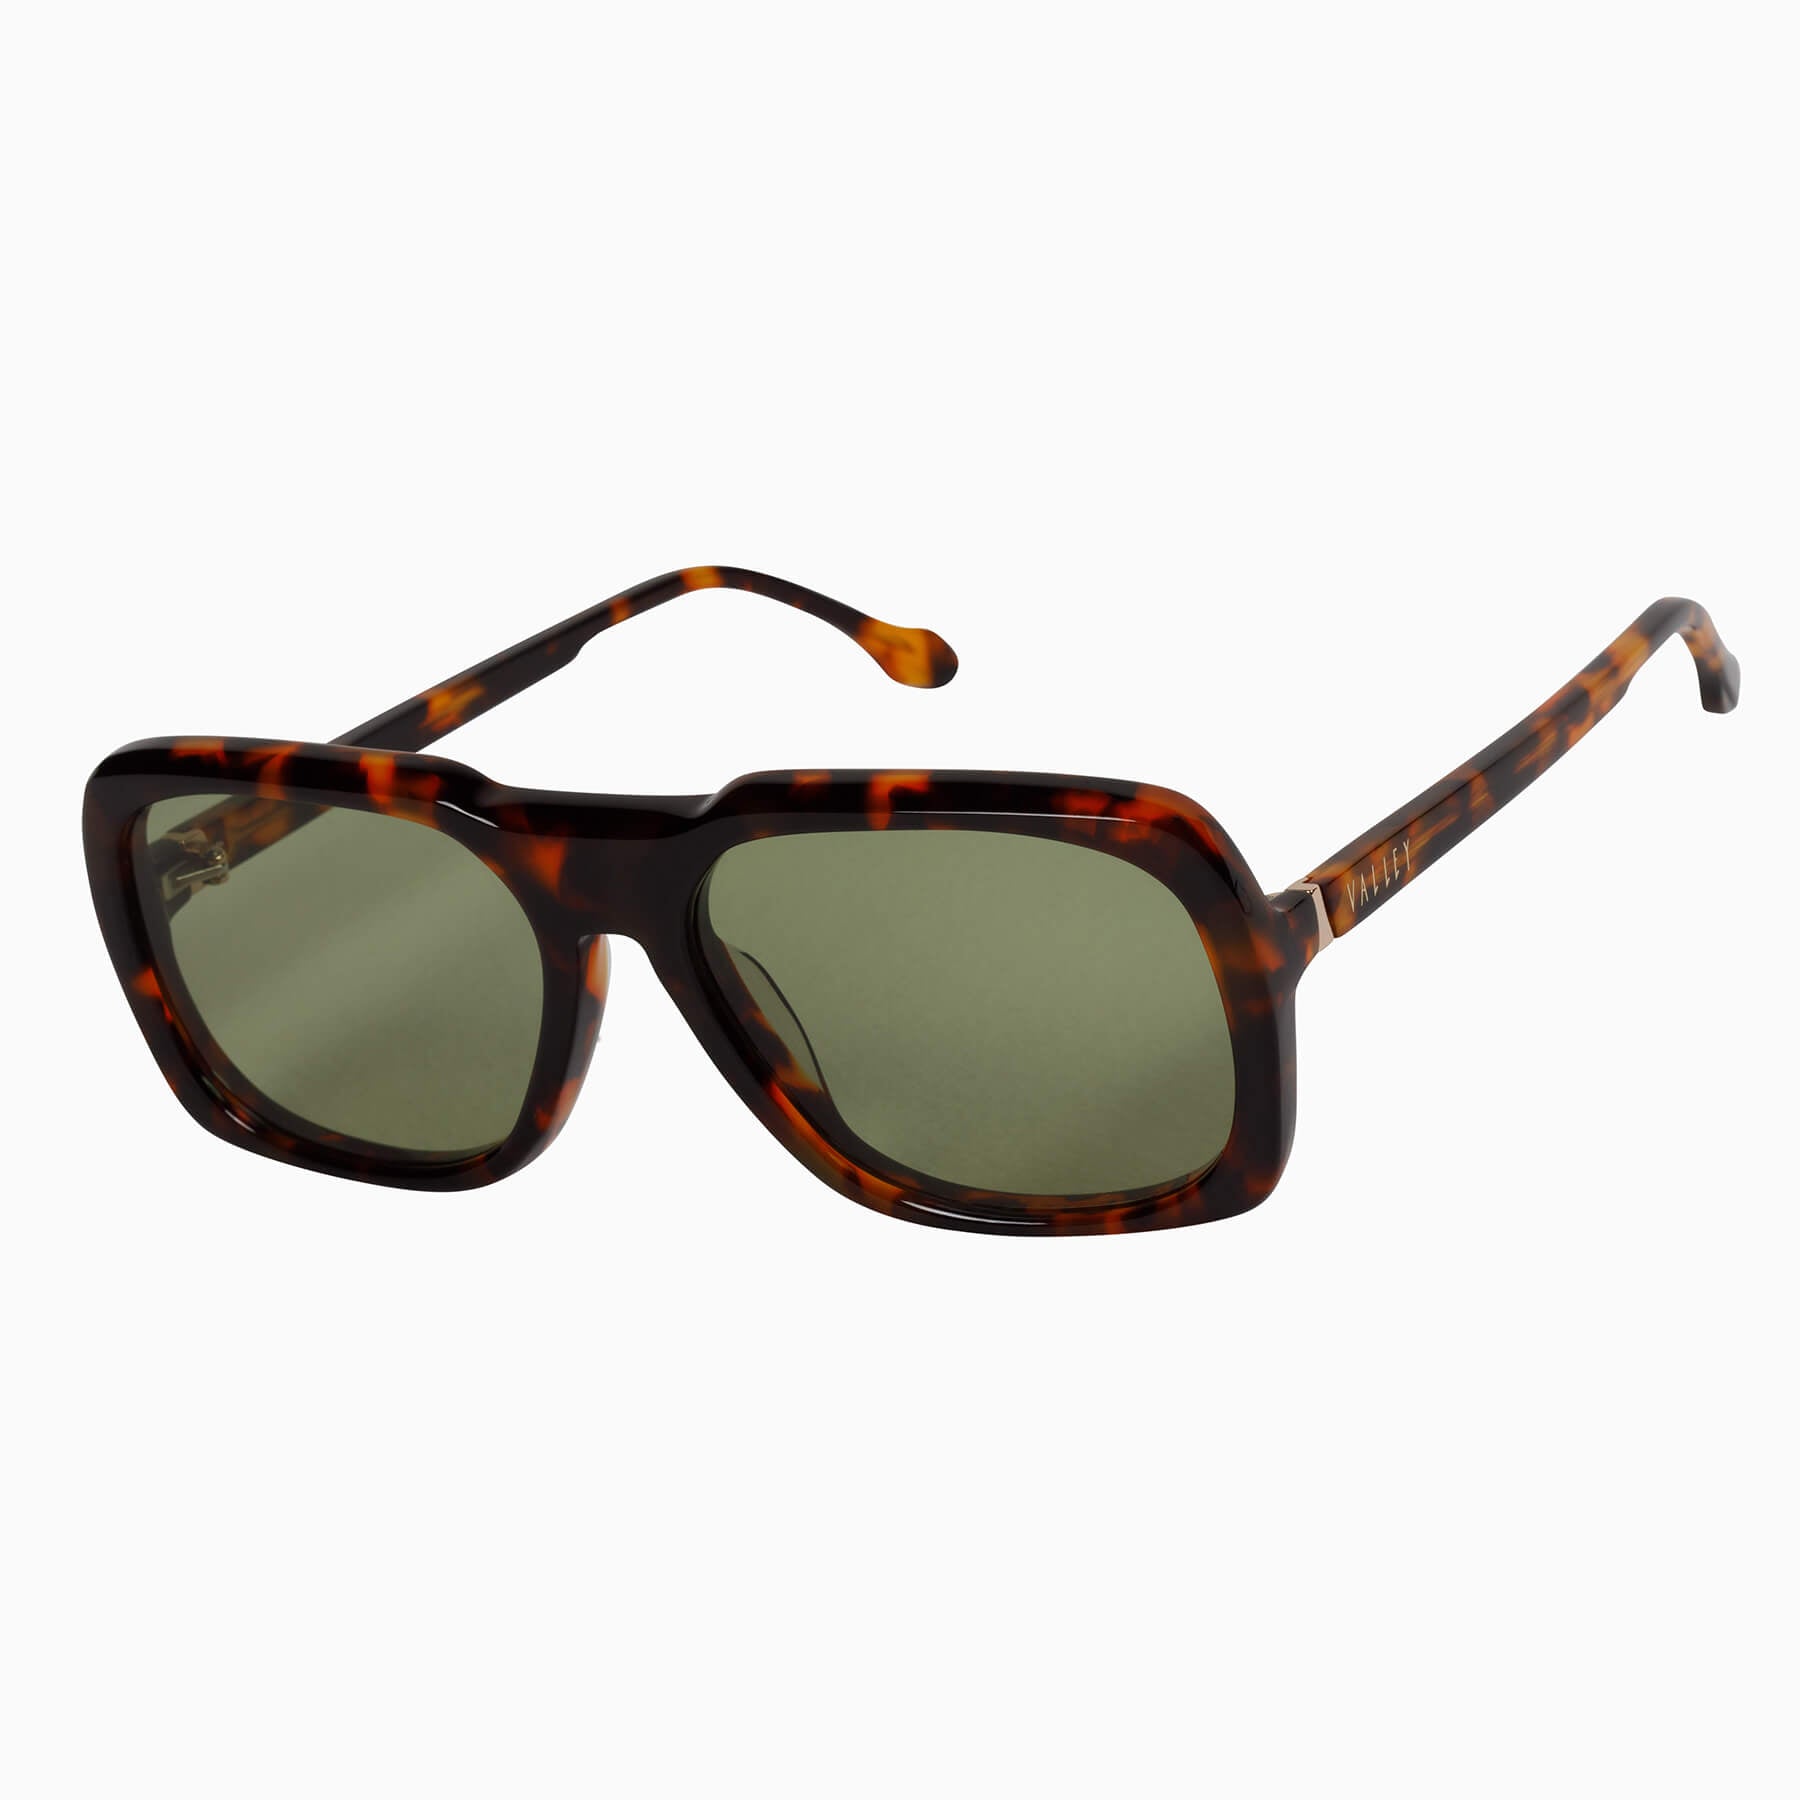 Valley Eyewear | Memoir | Sunglasses - Classic Tort w. 24k Gold Metal Trim / Olive Green Lens